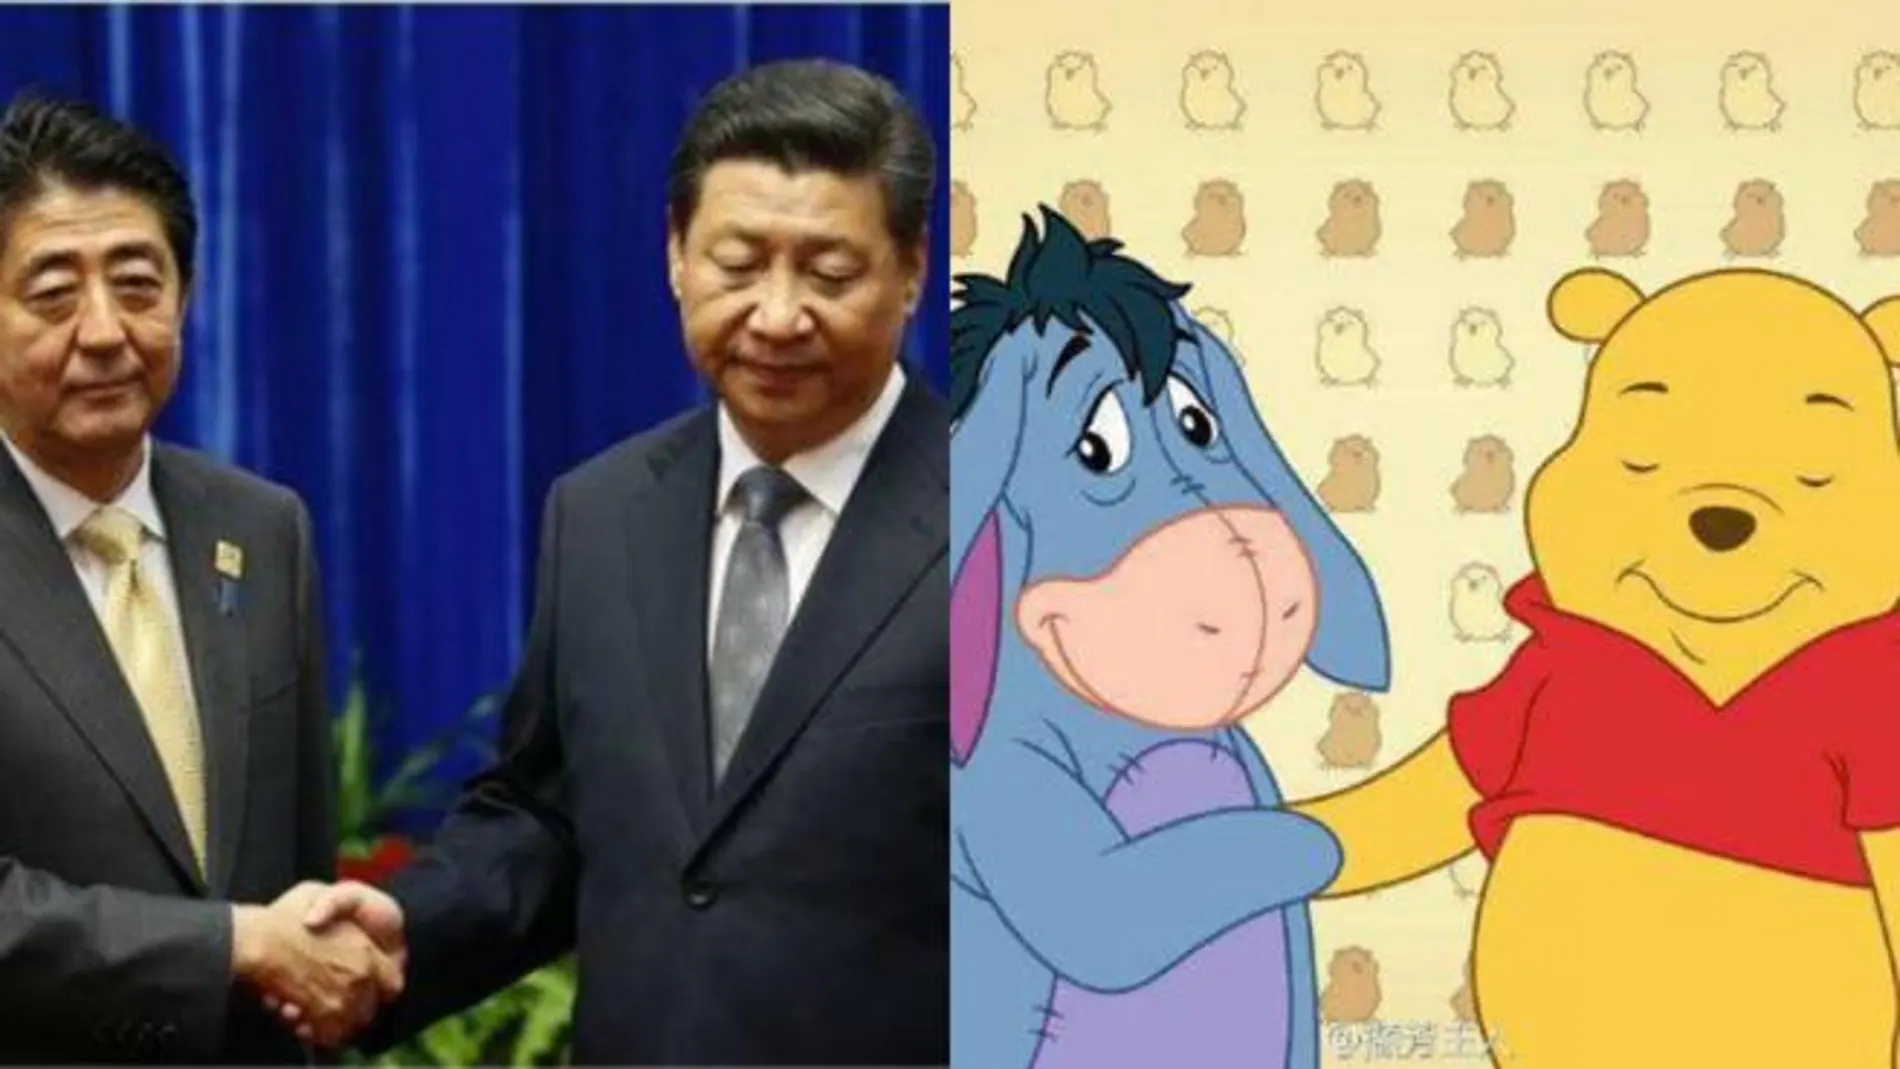 China vs Winnie the Pooh